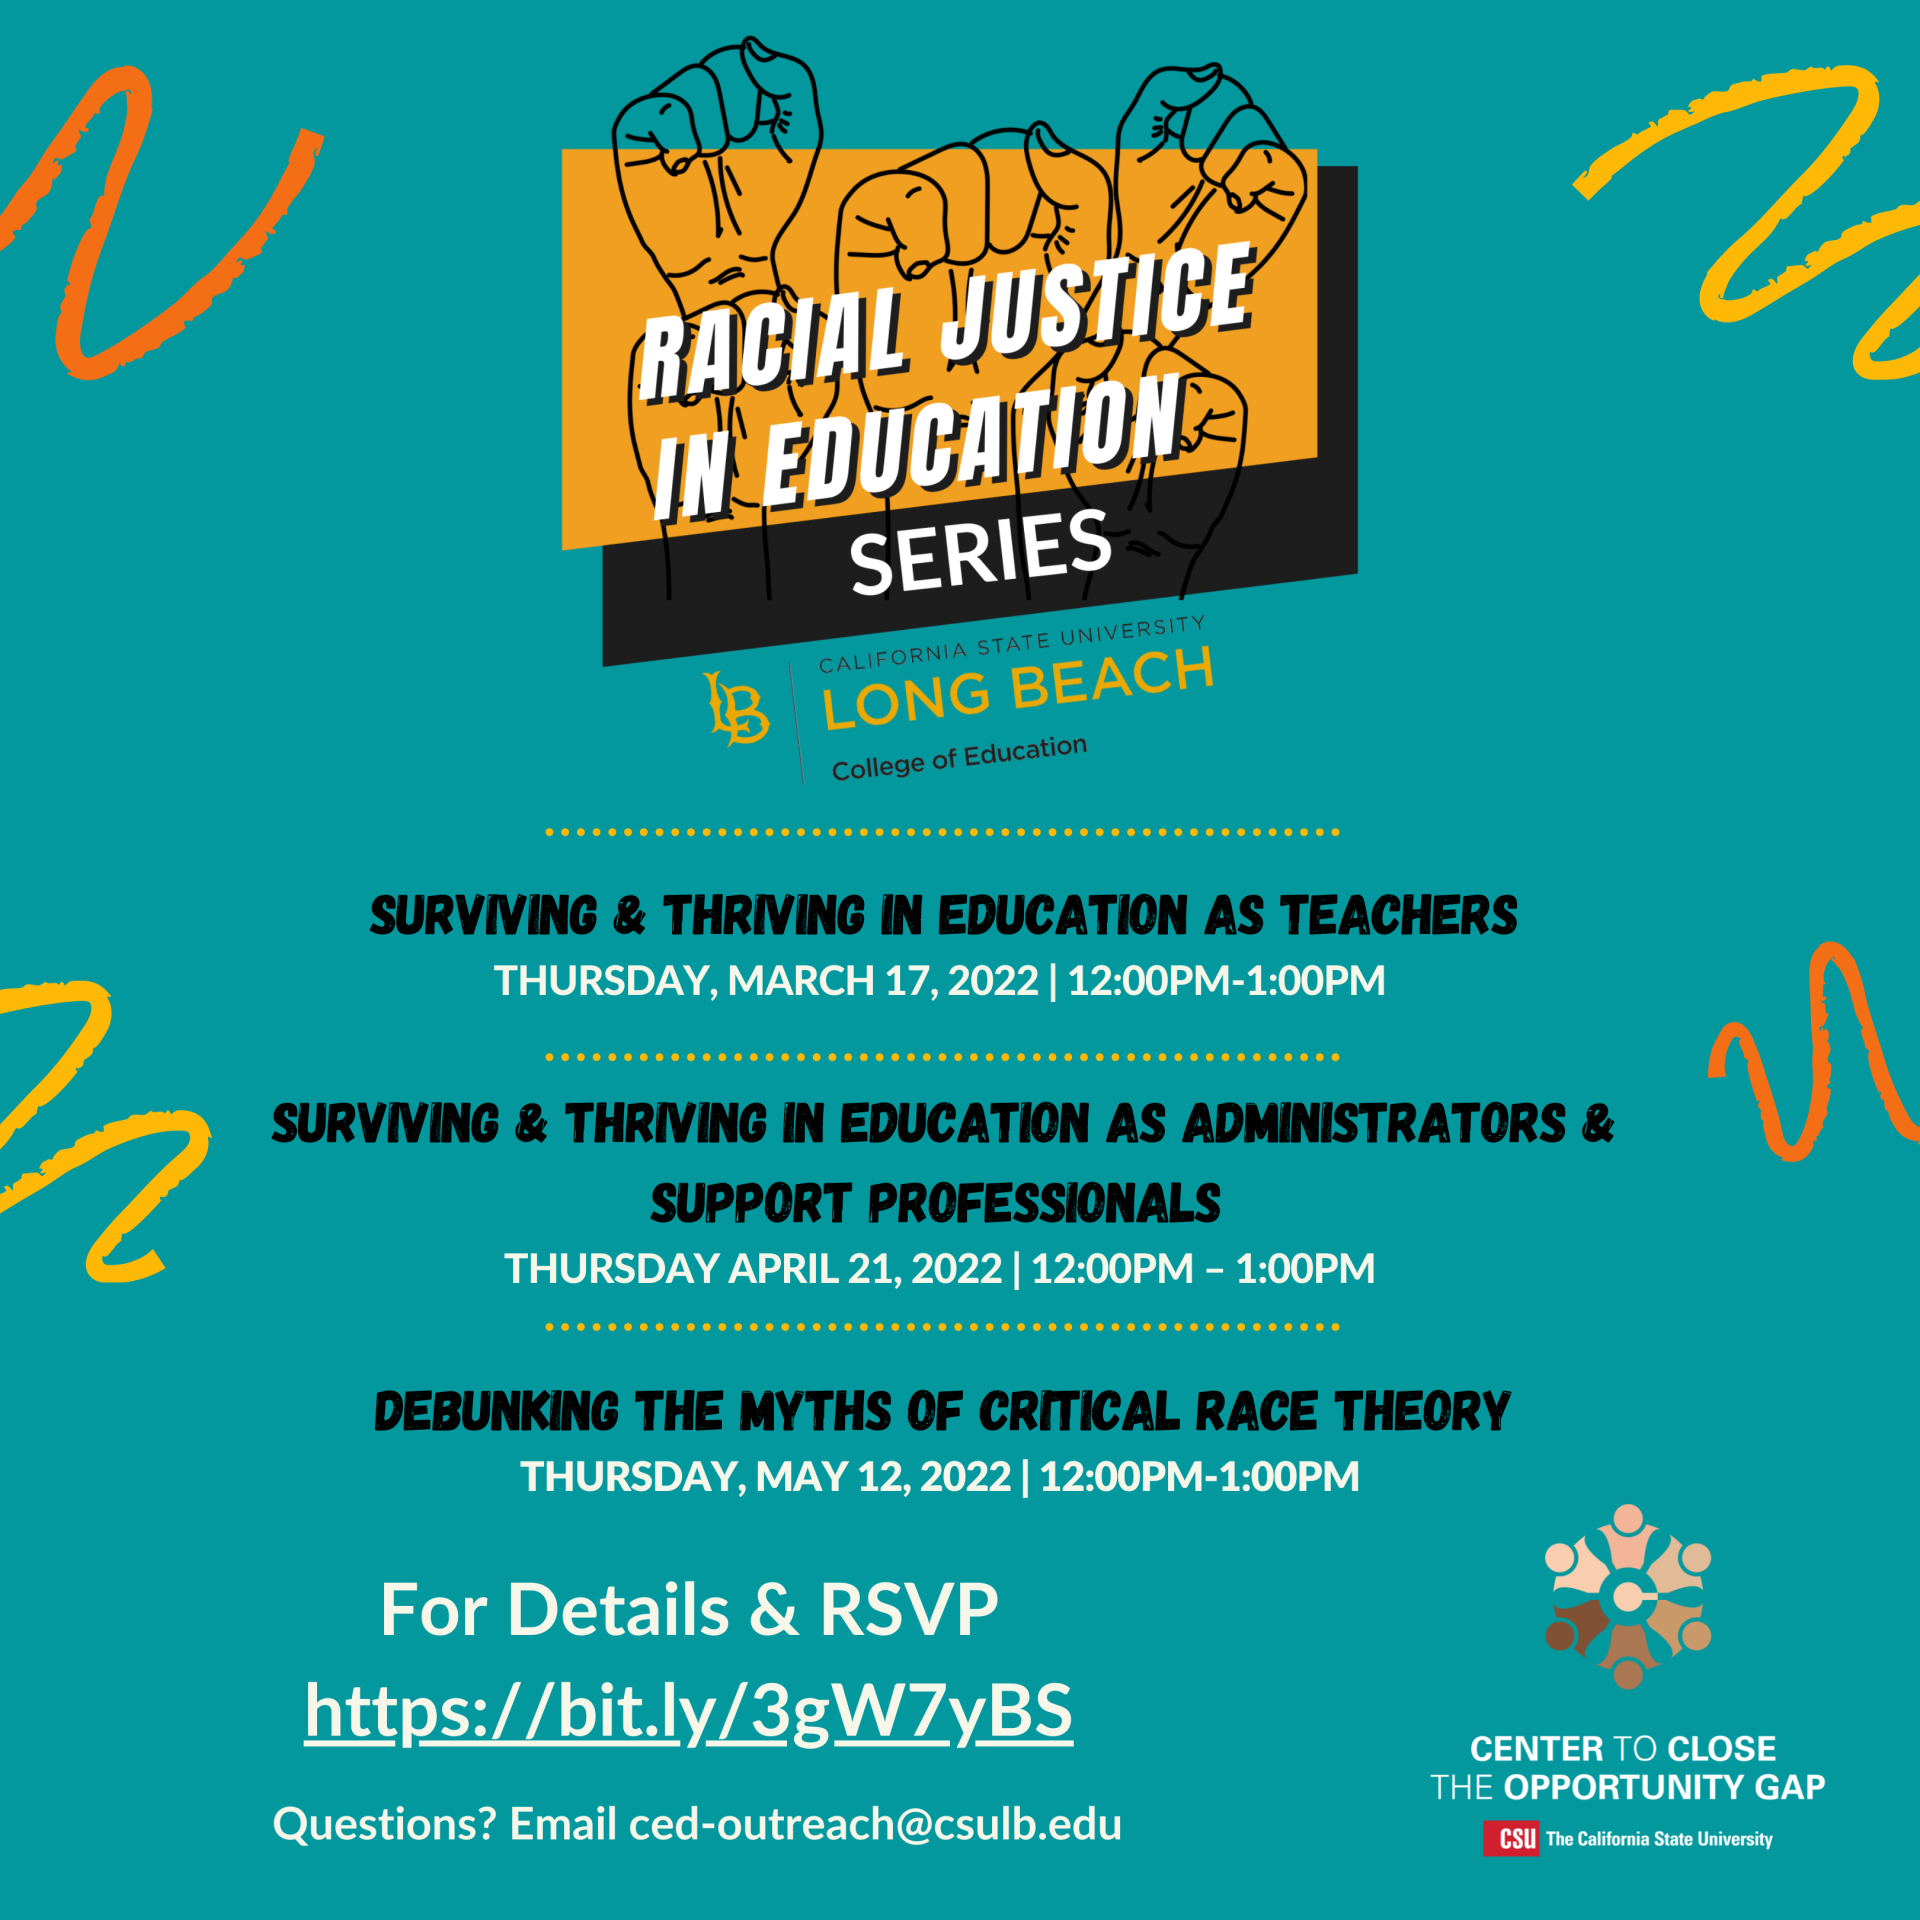 Racial Justice in Education Series Flyer